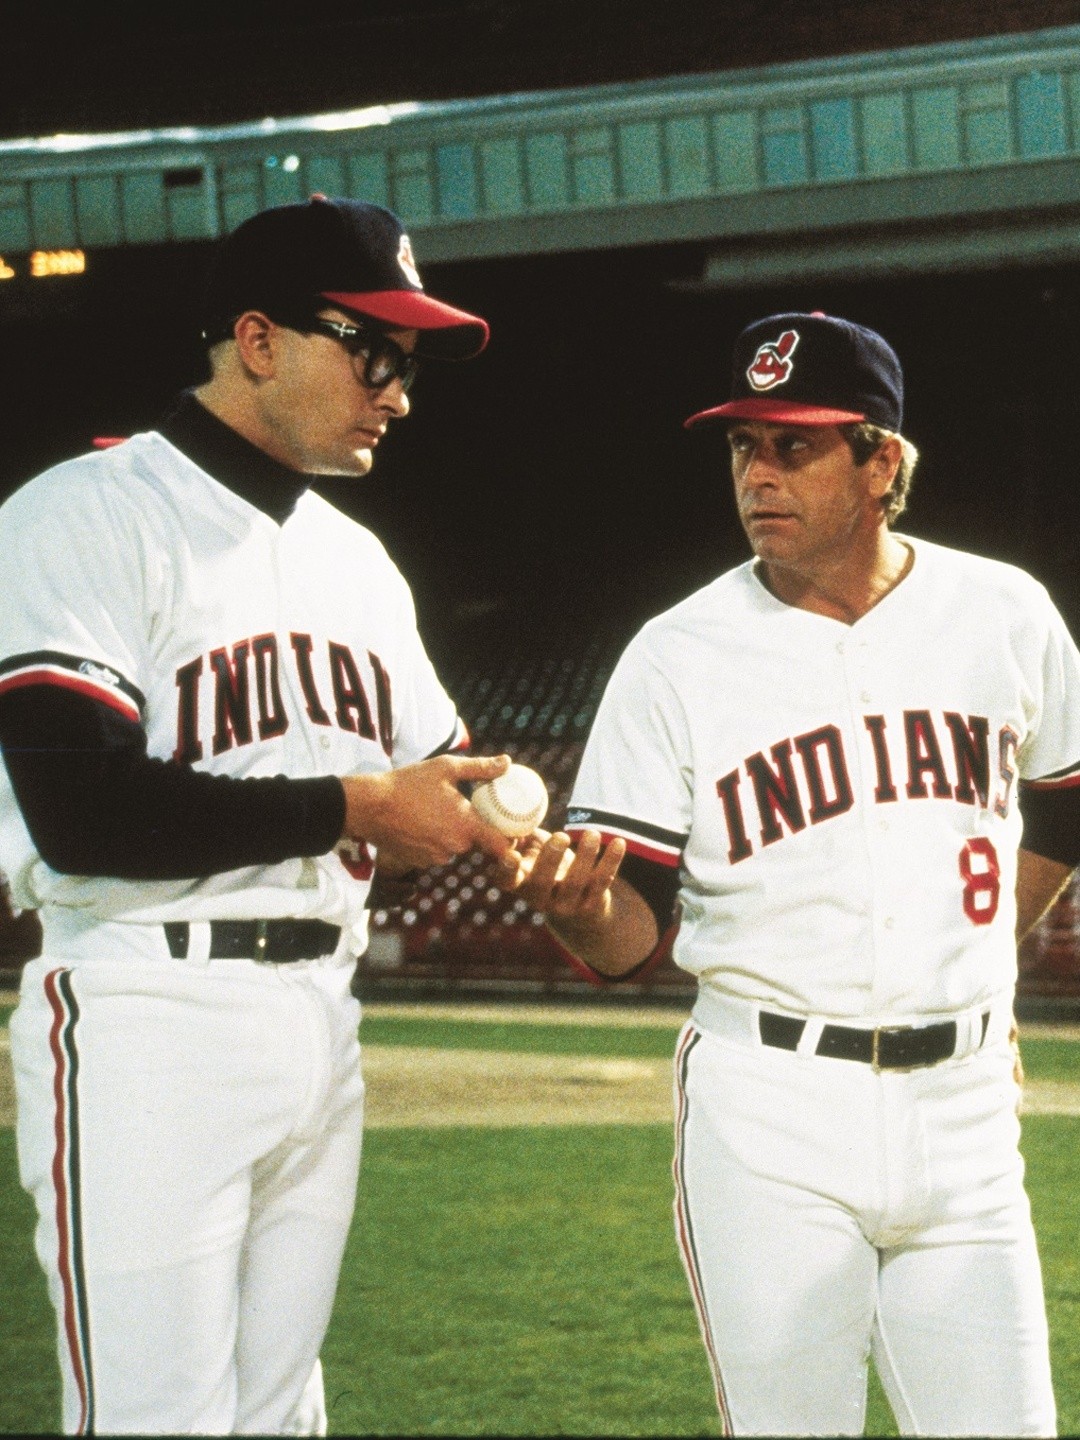 Major League (10/10) Movie CLIP - The Indians Win It (1989) HD